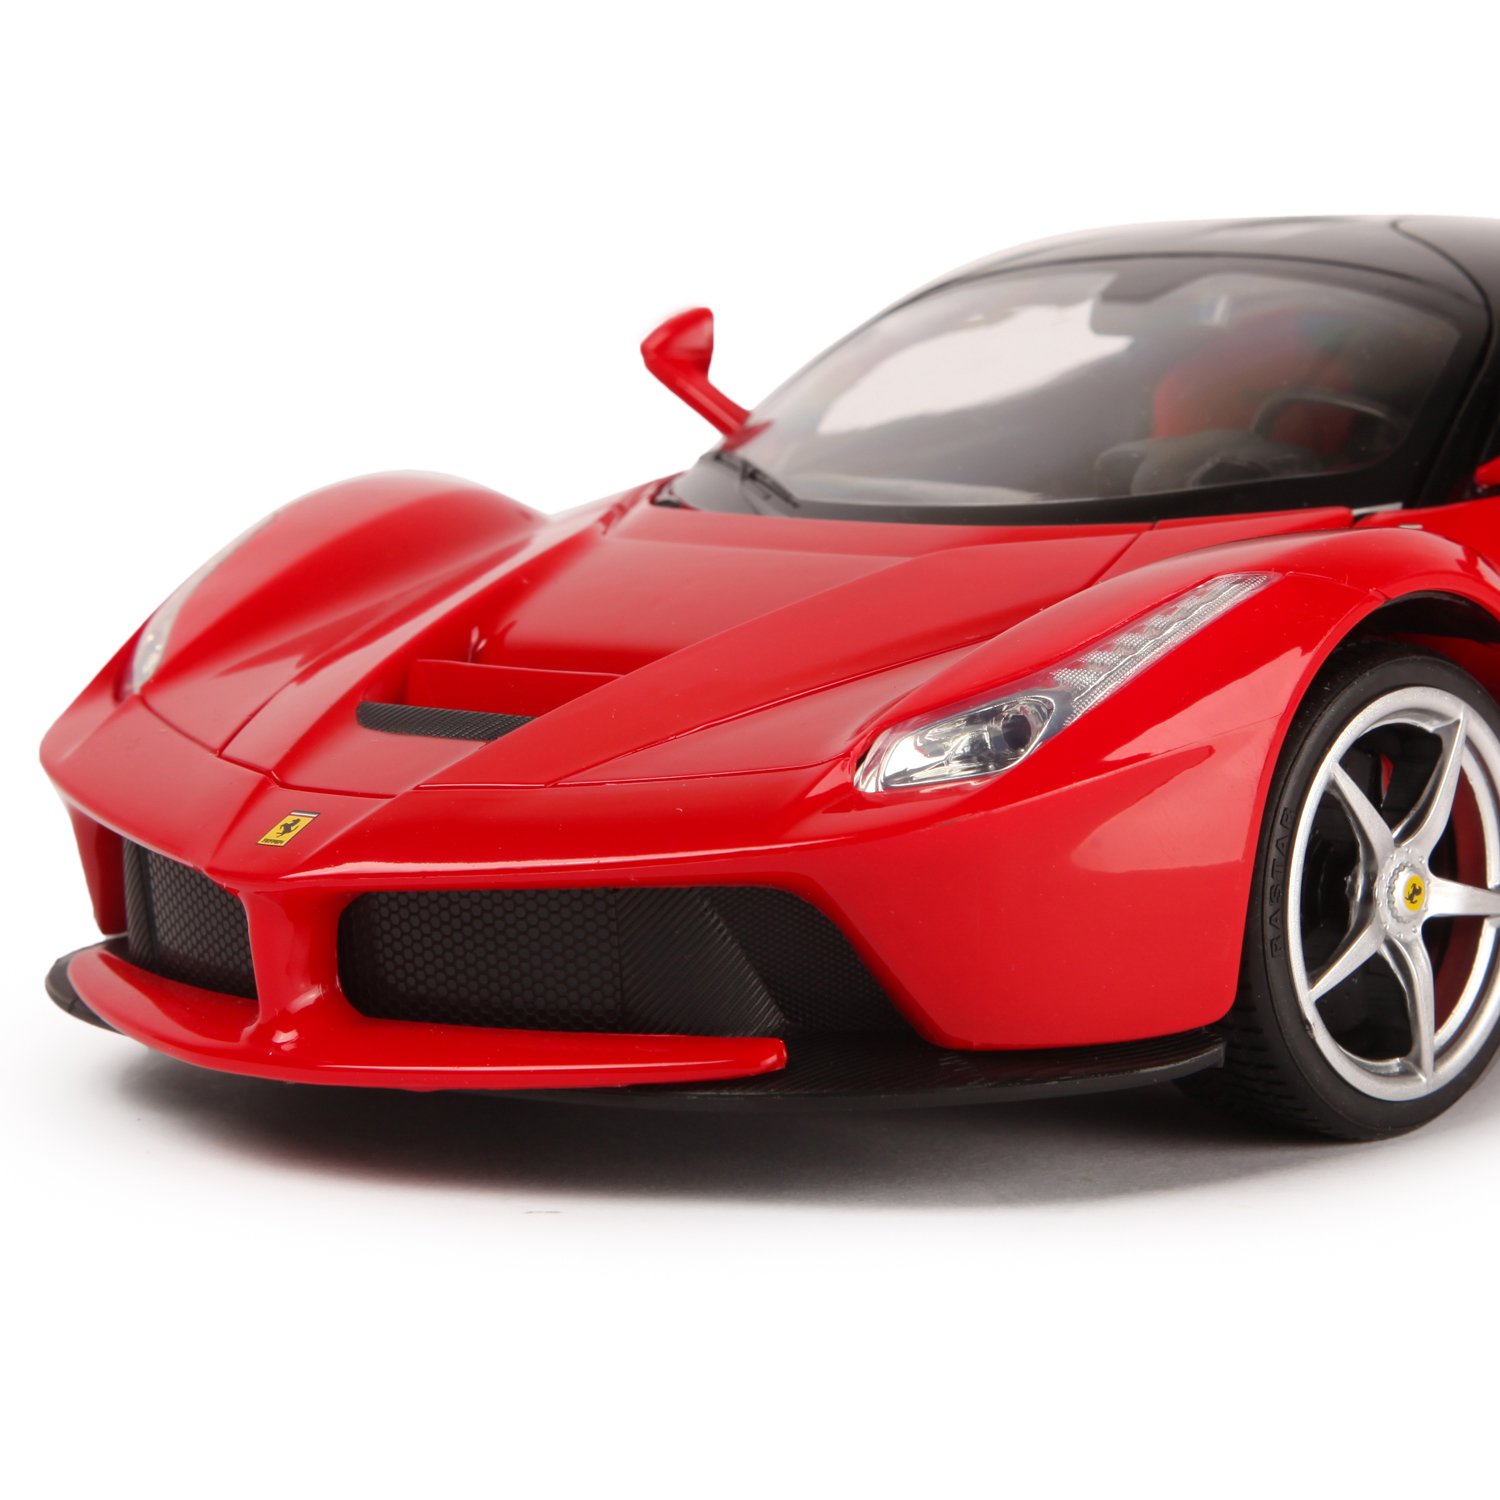 Машина Rastar РУ 1:14 Ferrari USB Красная 50160